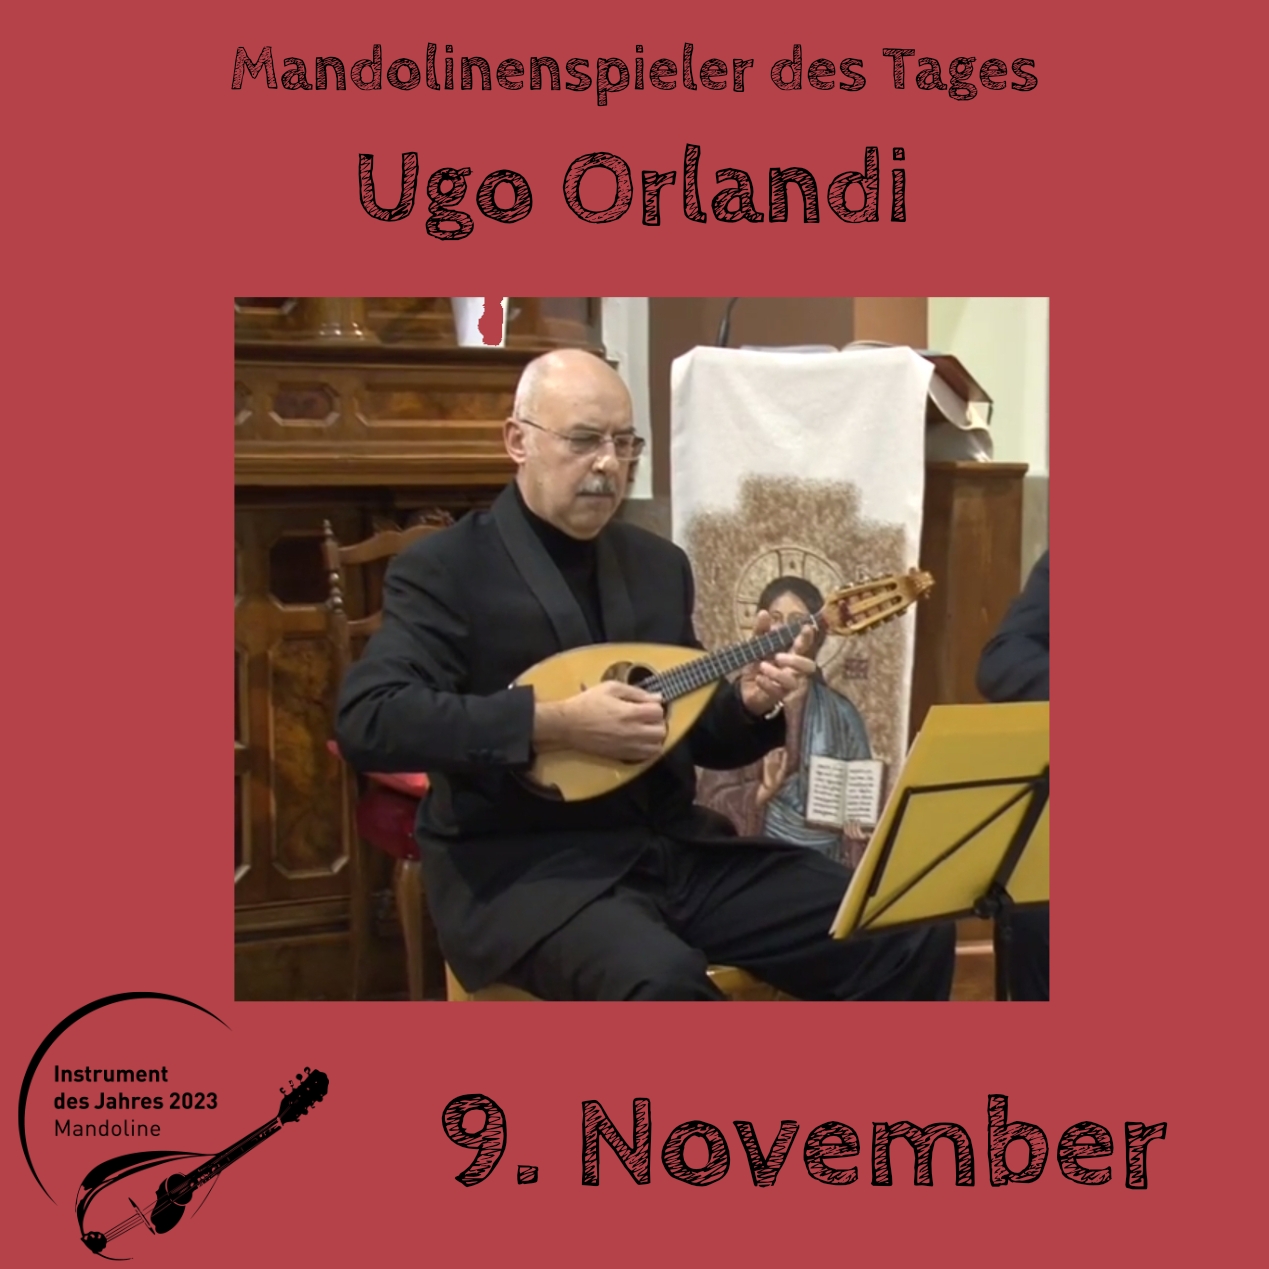 9. November - Ugo Orlandi Instrument des Jahres 2023 Mandolinenspieler Mandolinenspielerin des Tages